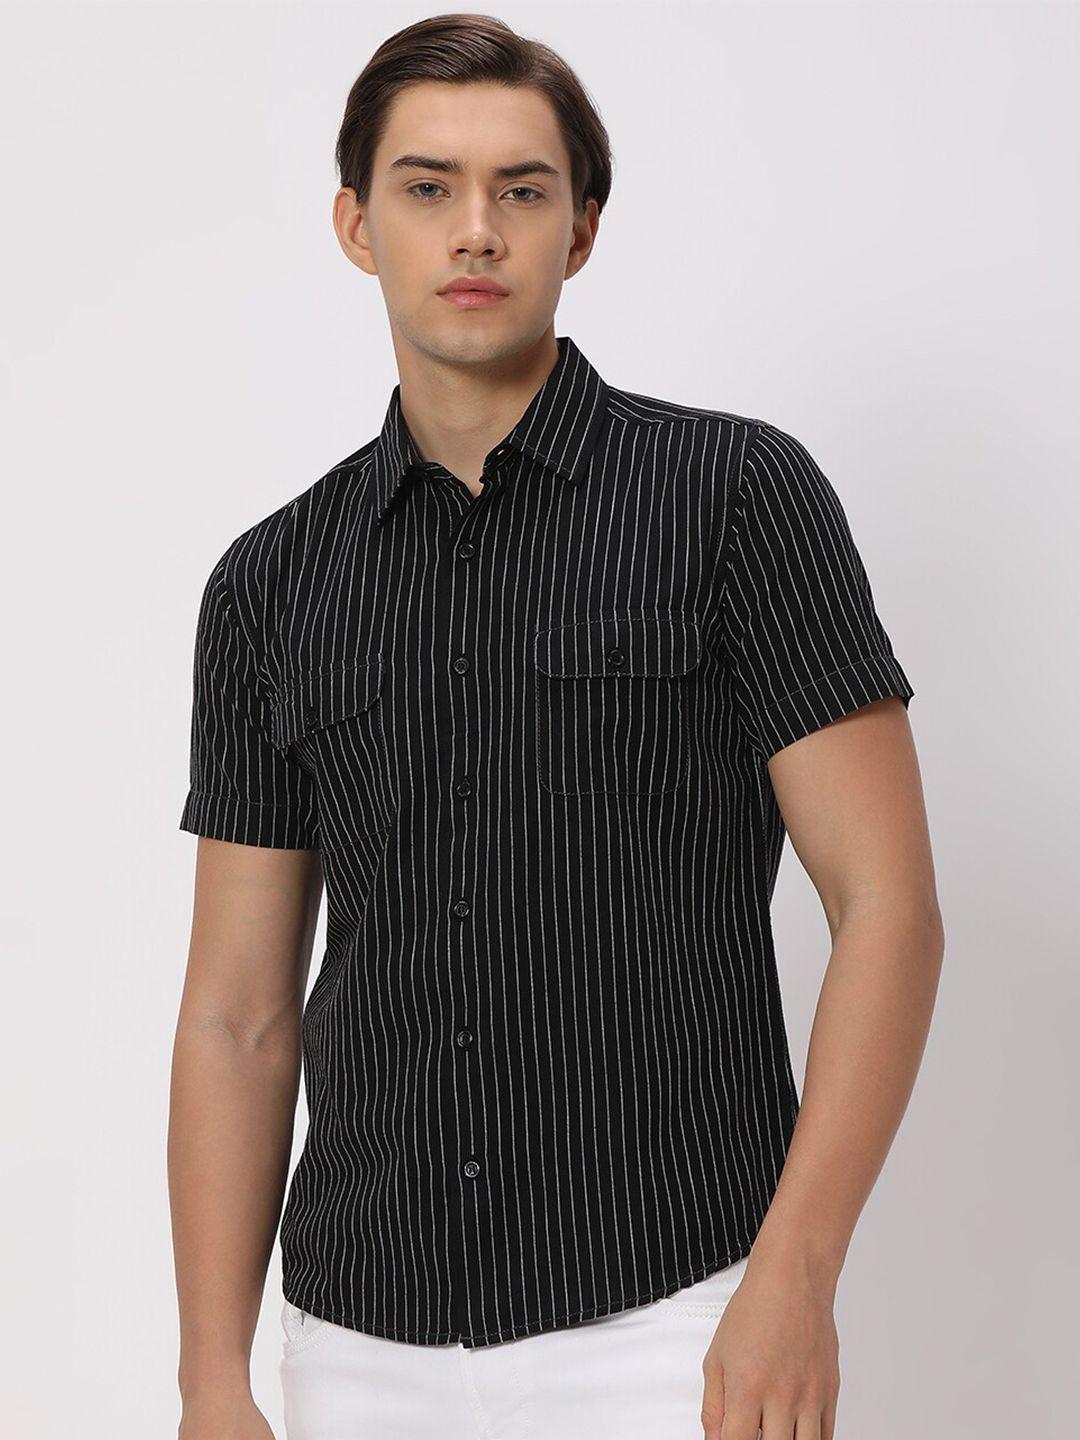 mufti-striped-striped-slim-fit-pure-cotton-casual-shirt